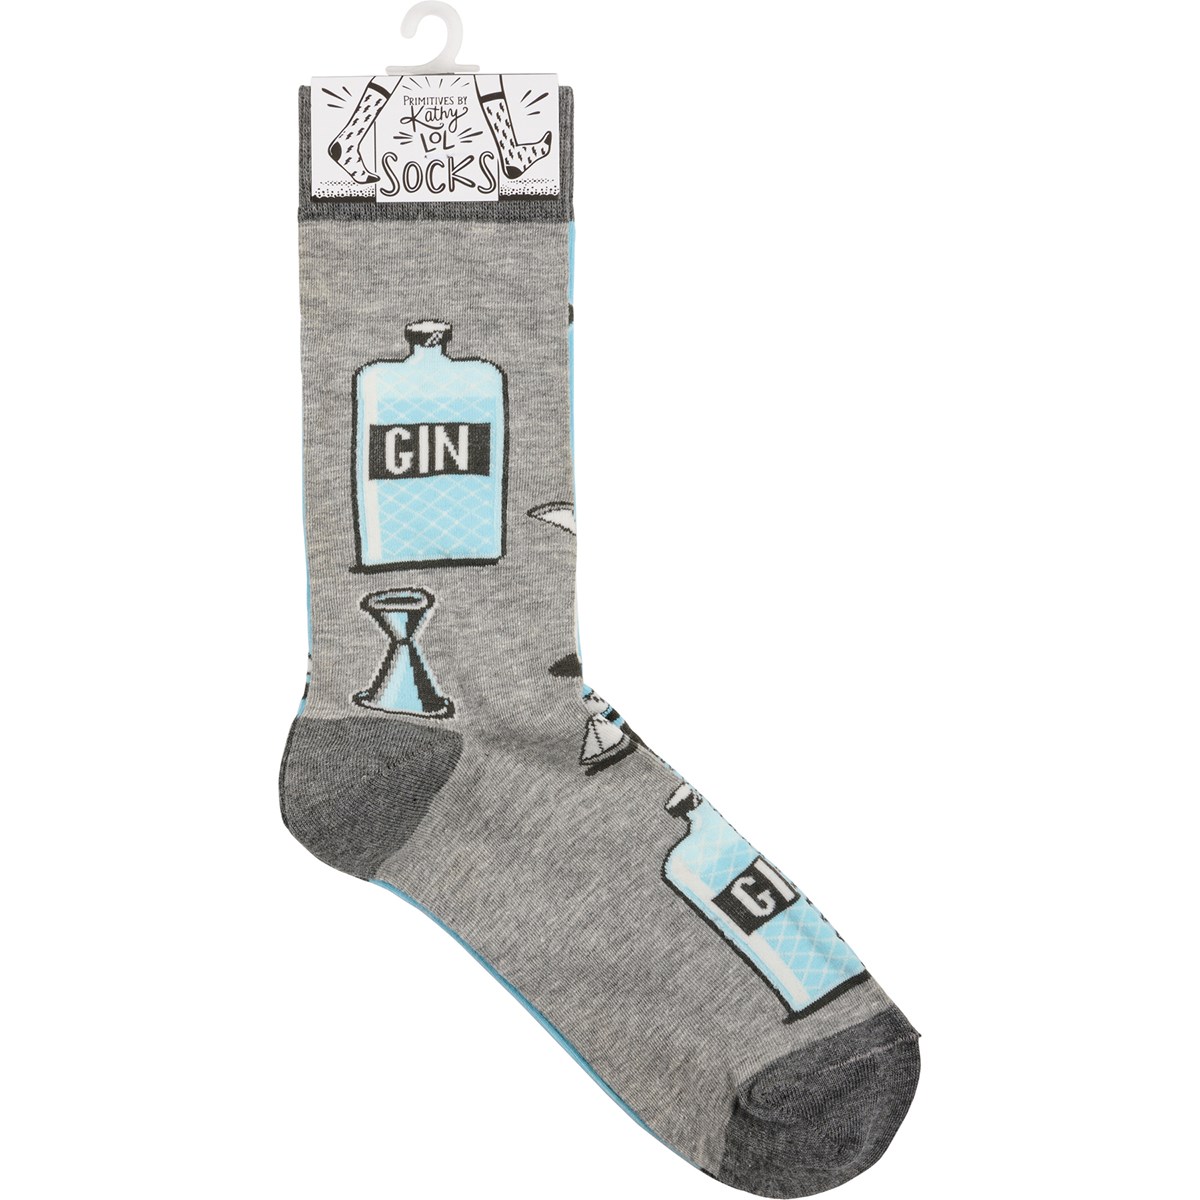 Socks - Gin & Tonic - One Size Fits Most - Cotton, Nylon, Spandex